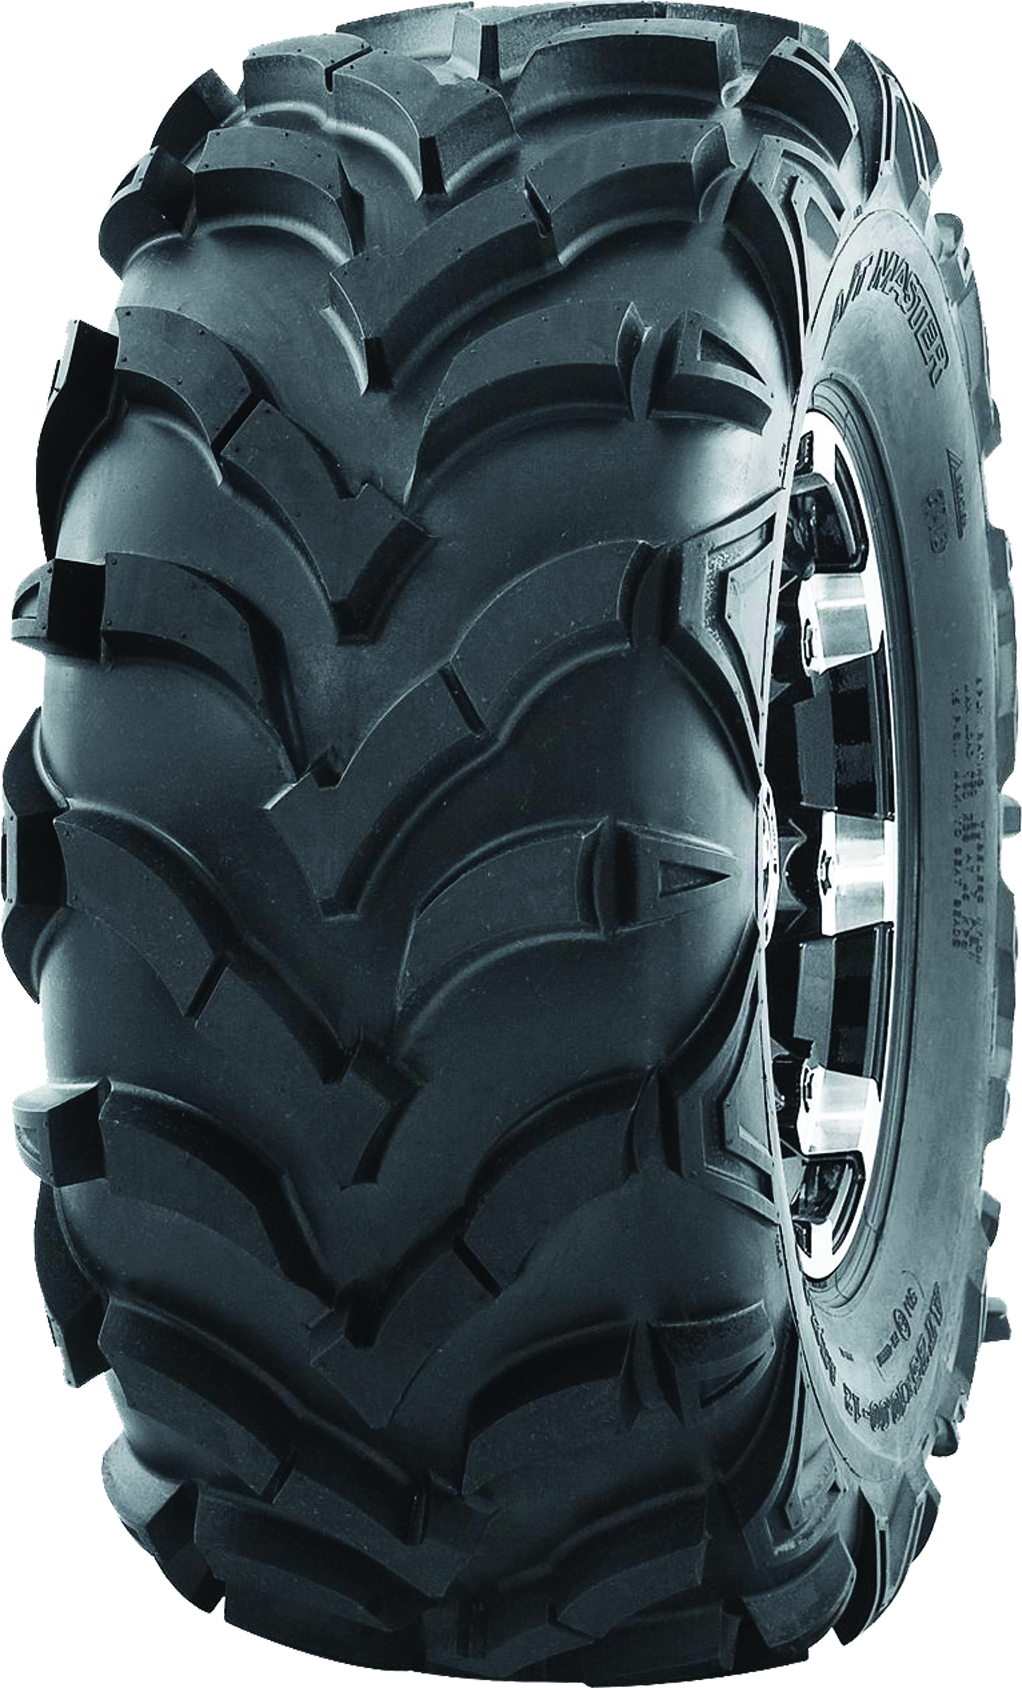 Kings Road Tyres expands portfolio with Blacklion PCR, Kingstone Turf/ATV ranges